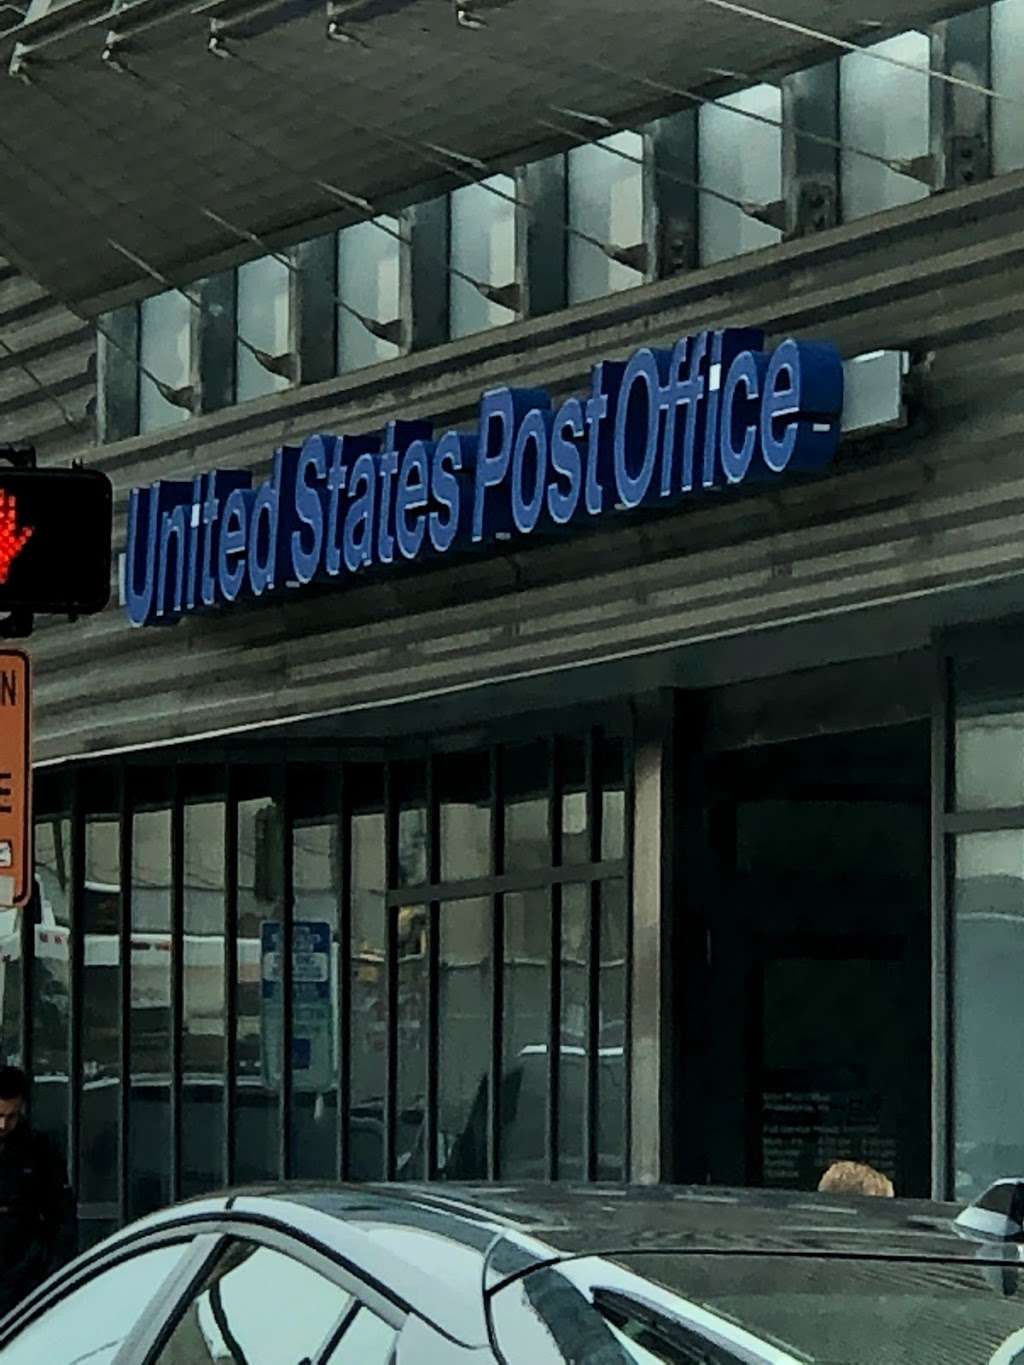 United States Postal Service | 3000 Chestnut St, Philadelphia, PA 19104 | Phone: (800) 275-8777